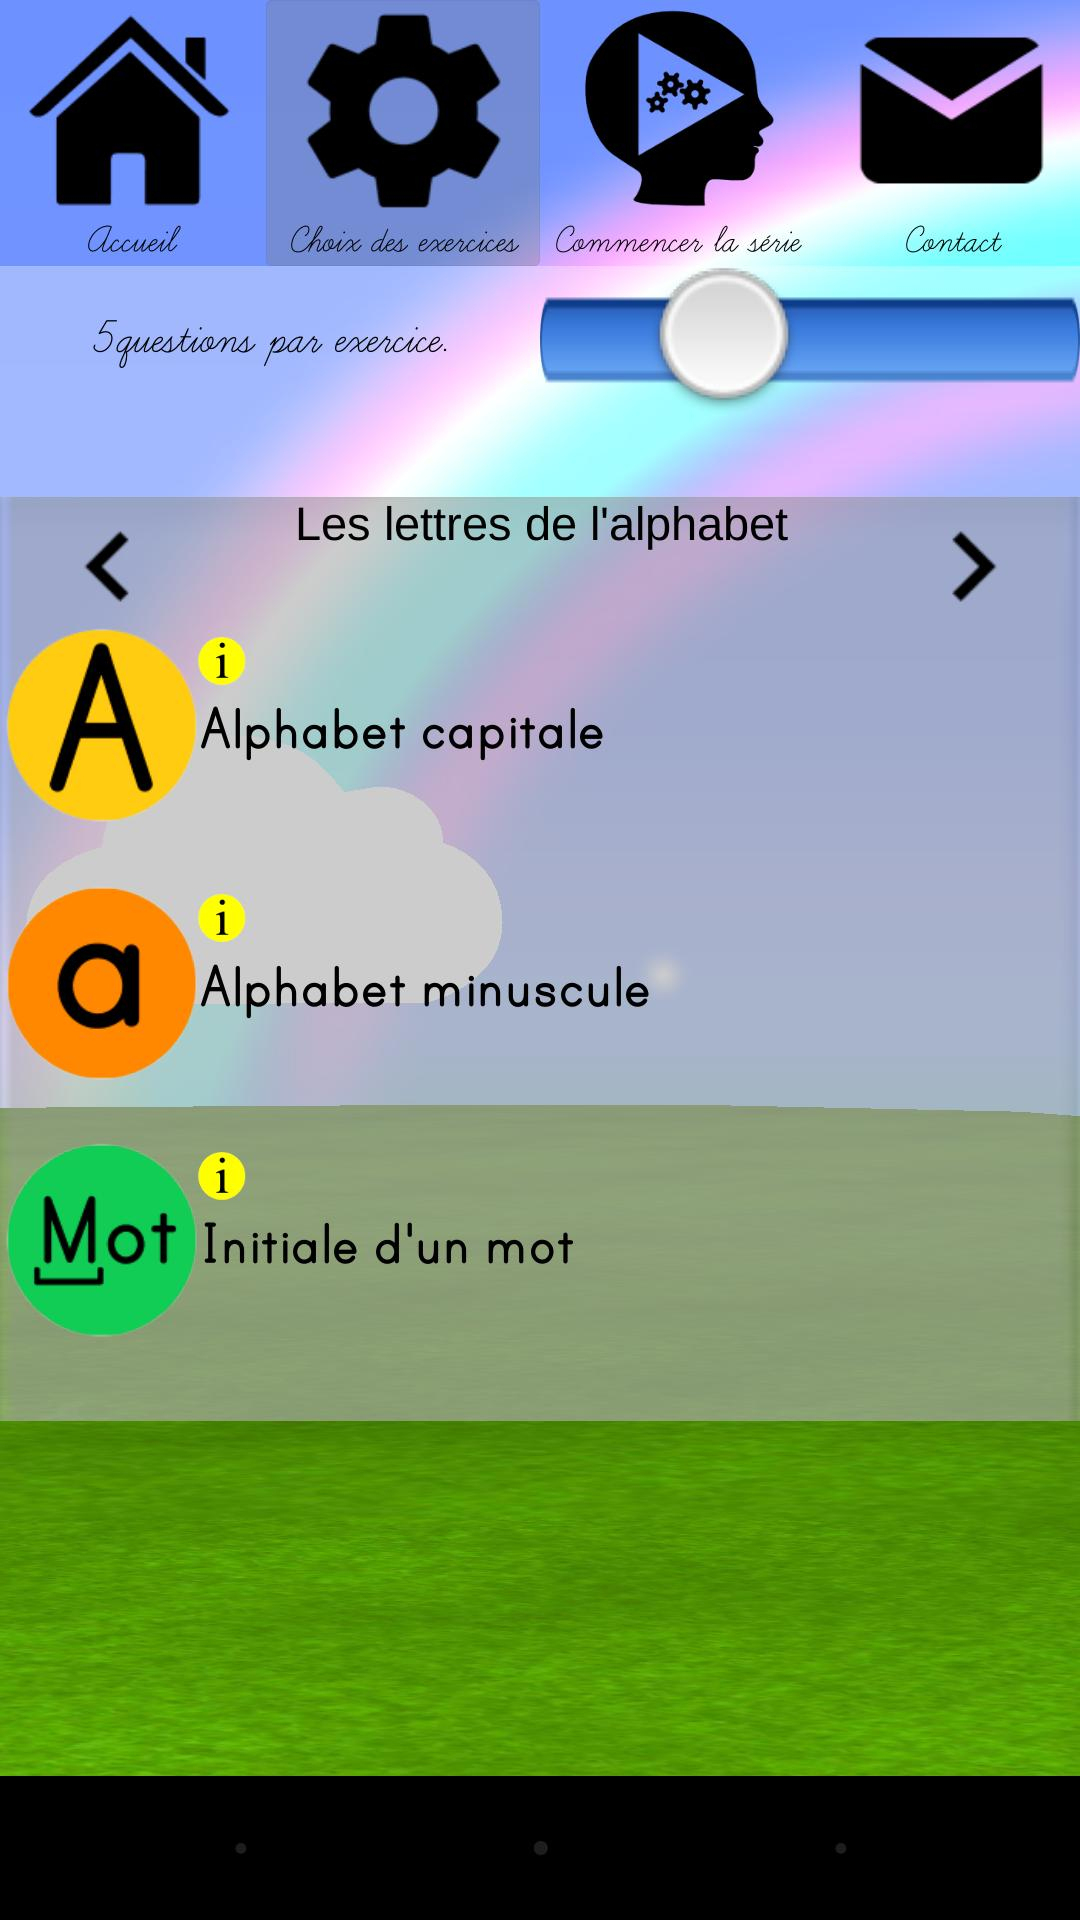 Touch'apprend Maternelle For Android - Apk Download concernant L Alphabet Minuscule